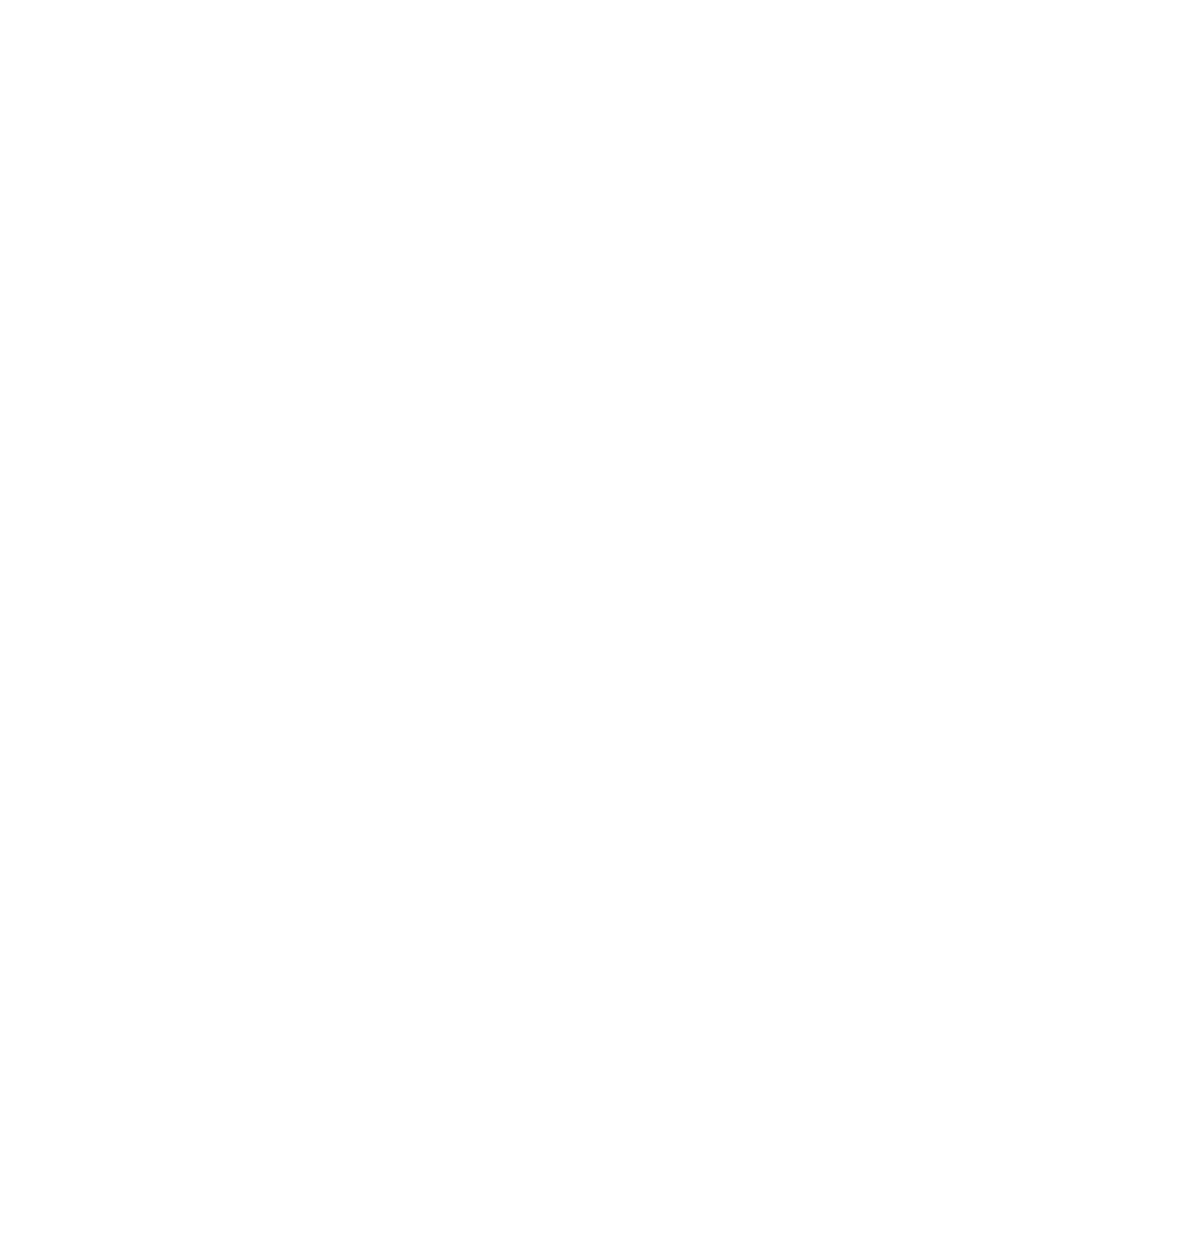 Tripadvisor Certificate of Excellence Award - 2017